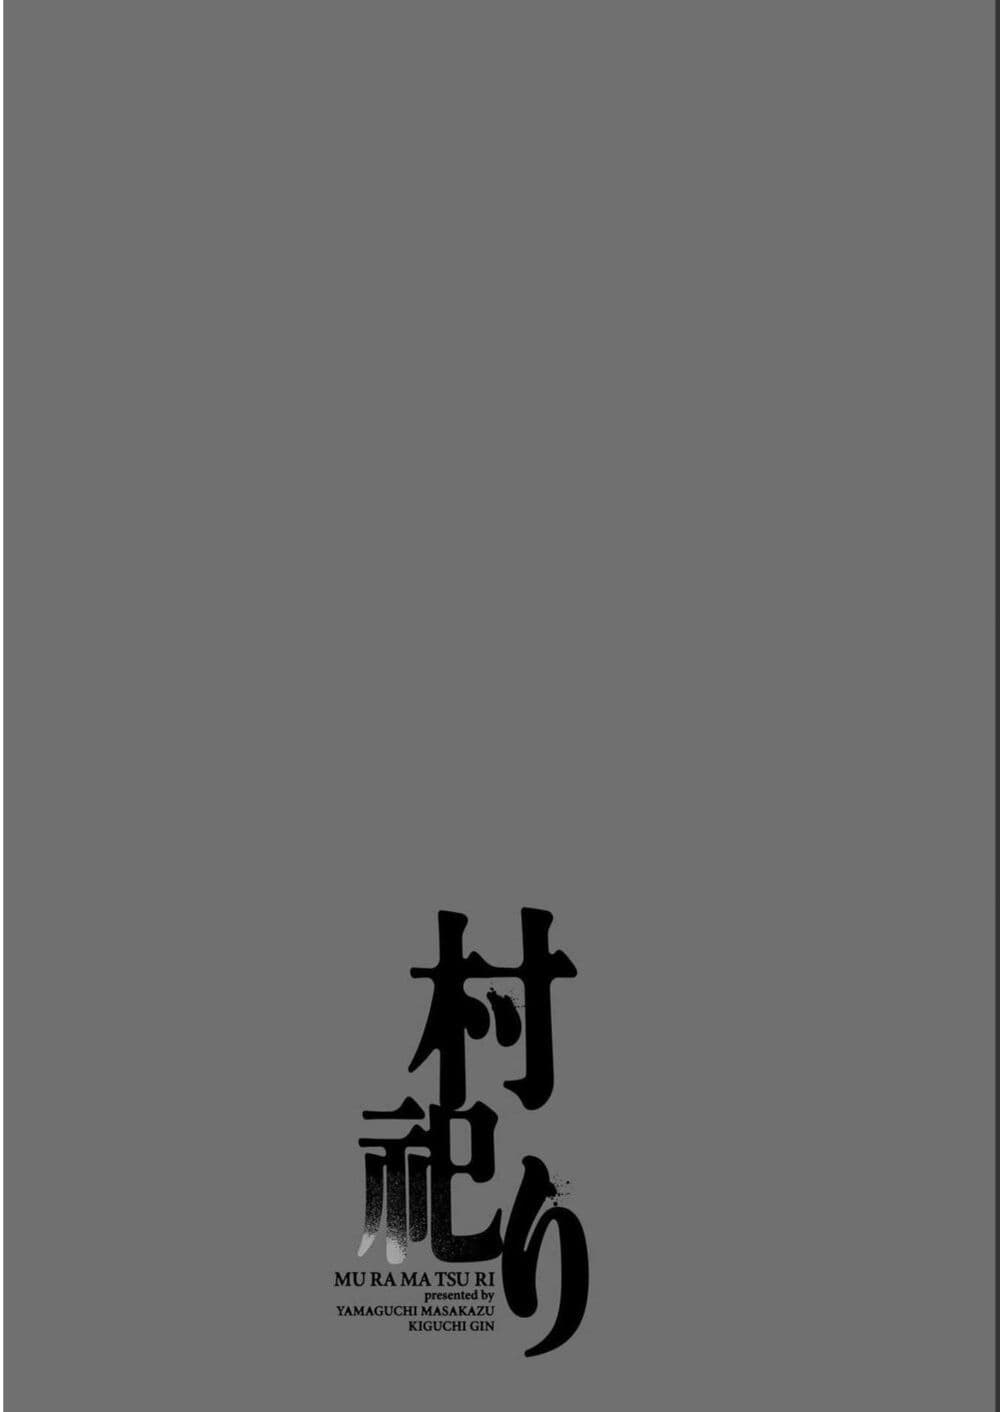 Mura Matsuri 19.18 (19)